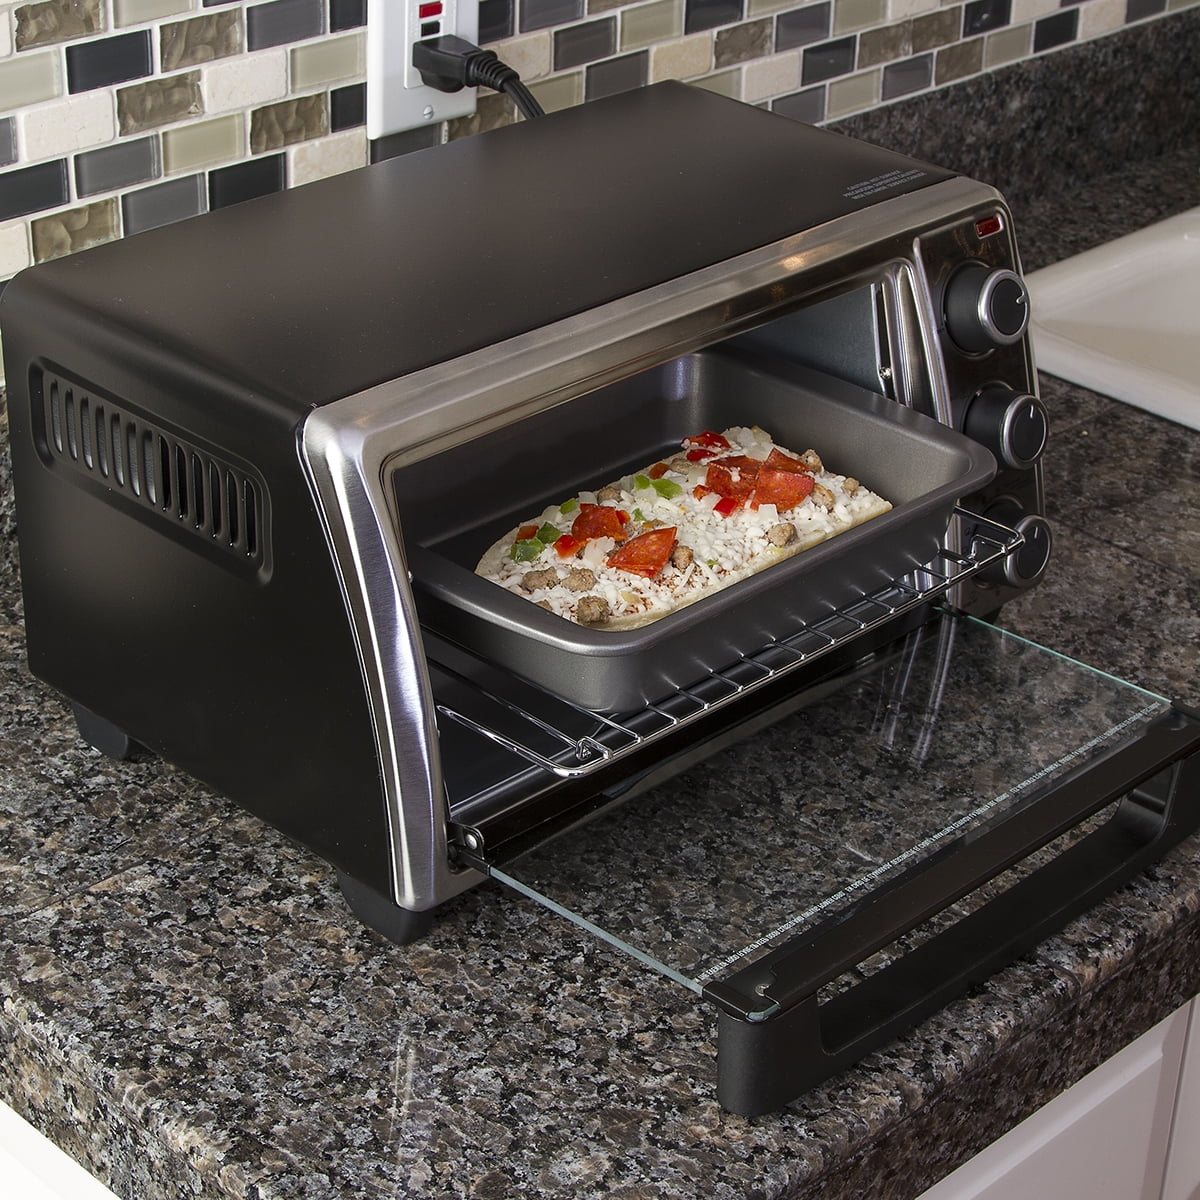 BakeIns Toaster Oven Set, 4 Piece - Ecolution